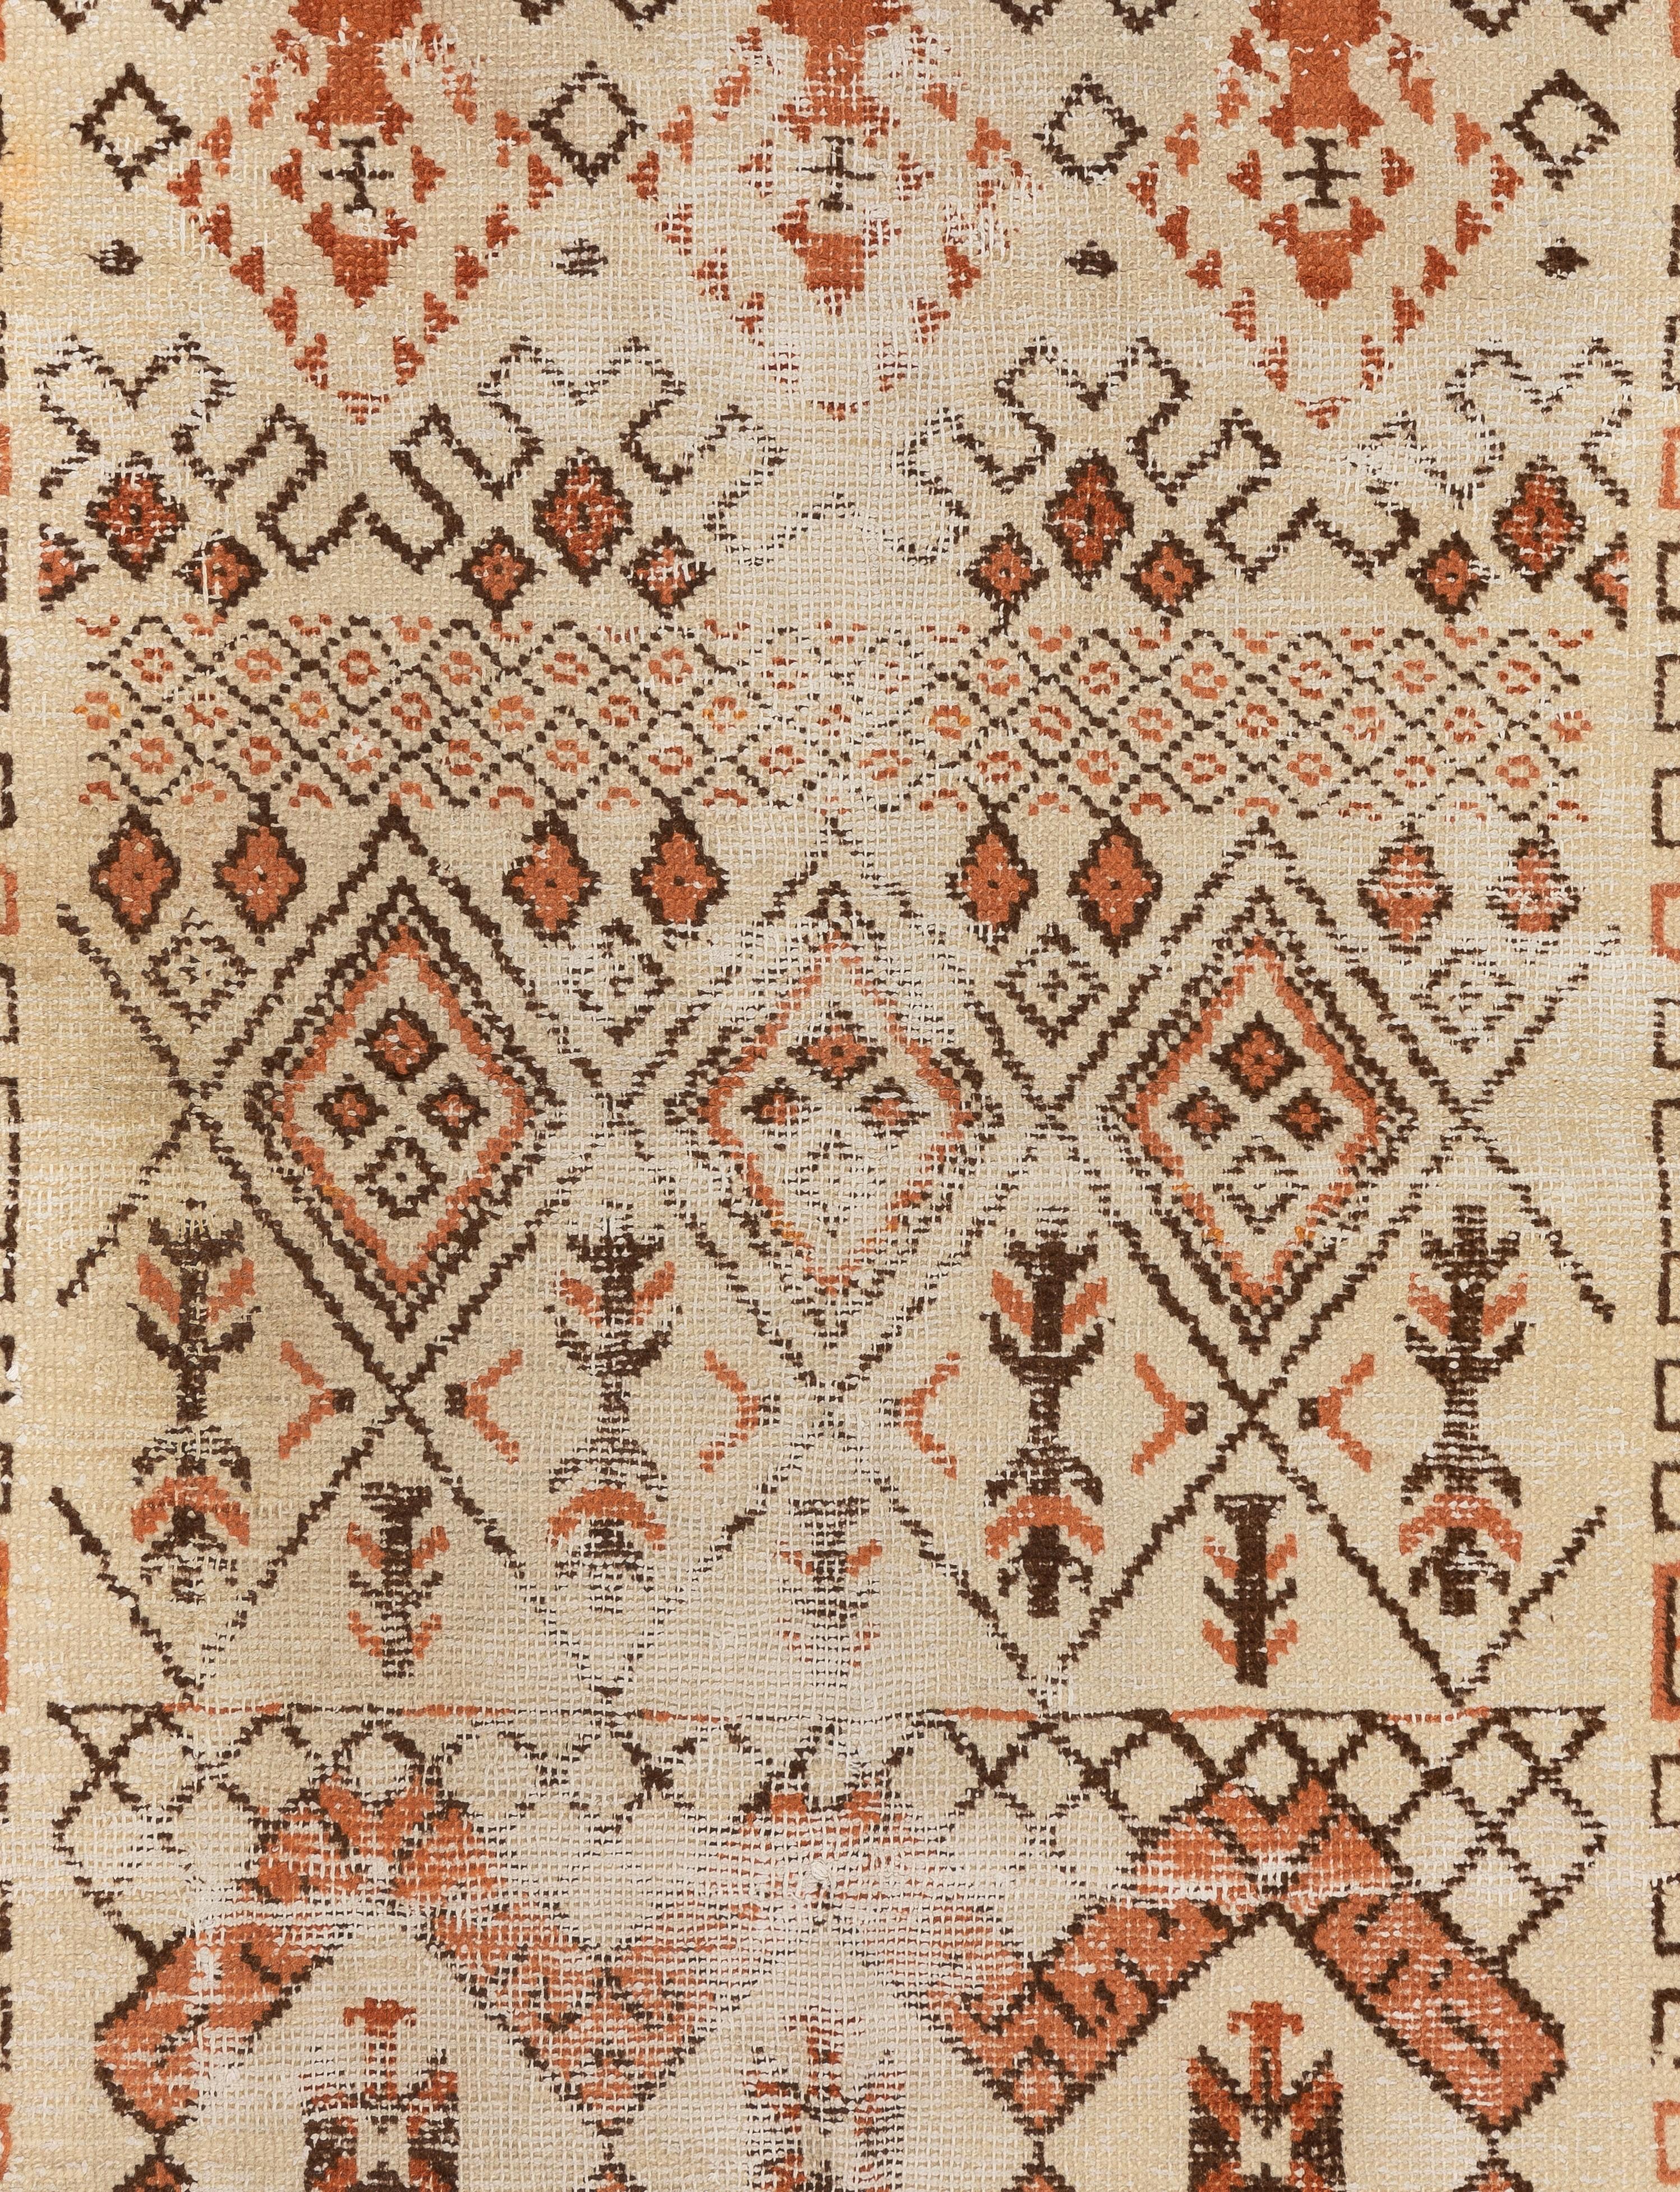 Hand-Woven 3.8x6 ft Antique Turkish Rug. Geometric Design in Beige, Orange, Brown For Sale